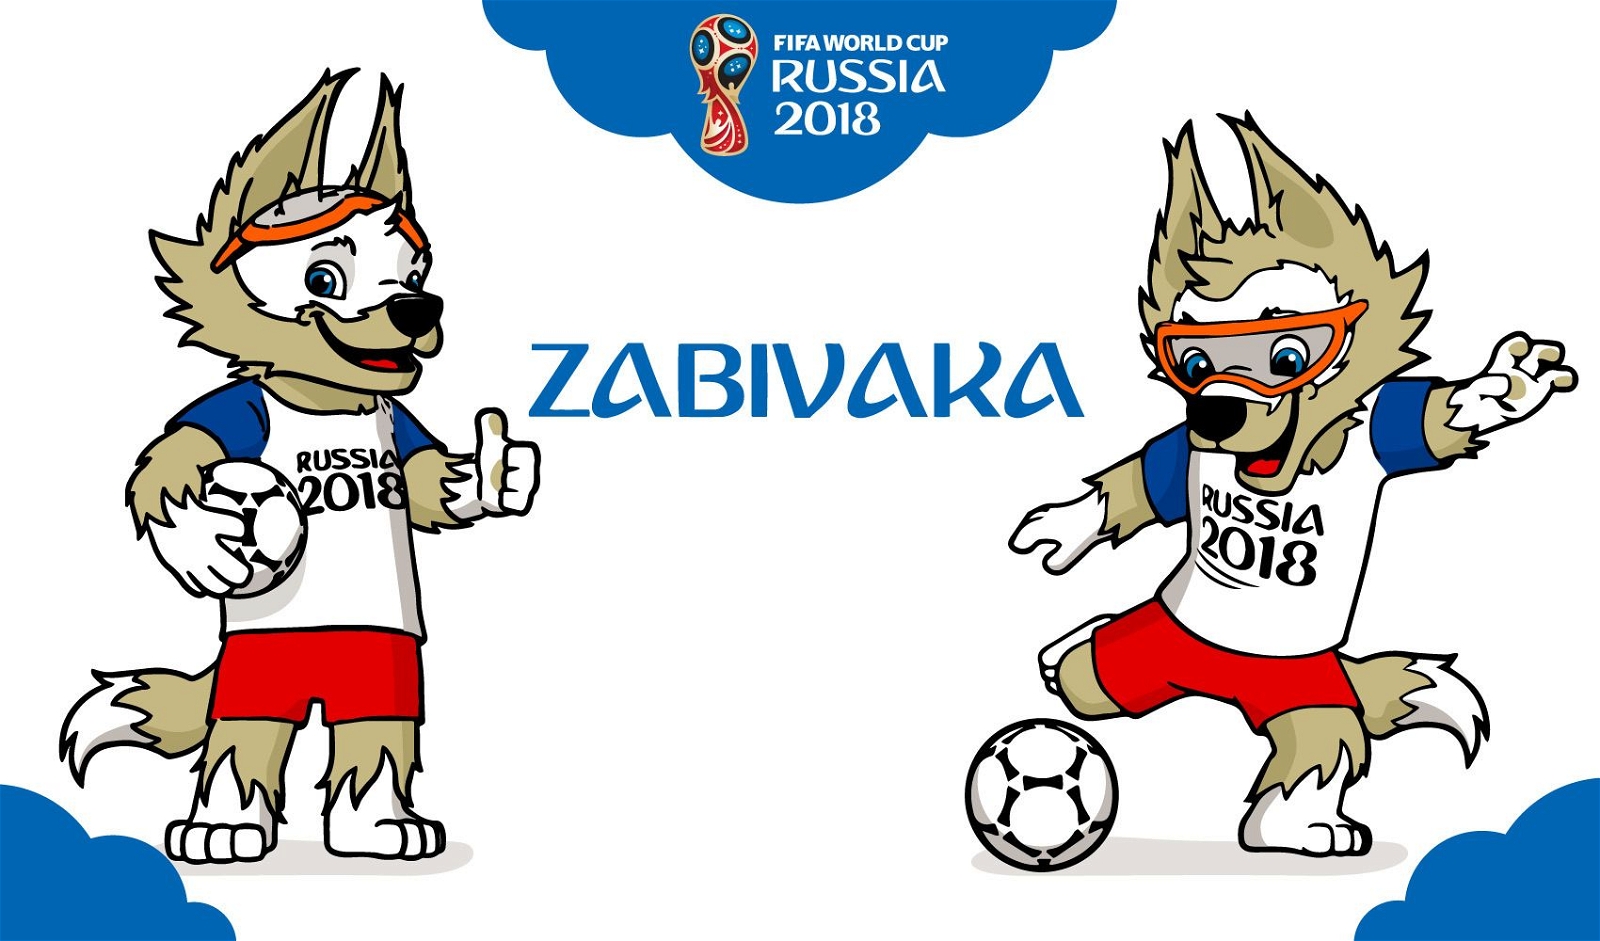 Russia 2018 World Cup mascot Zabivaka